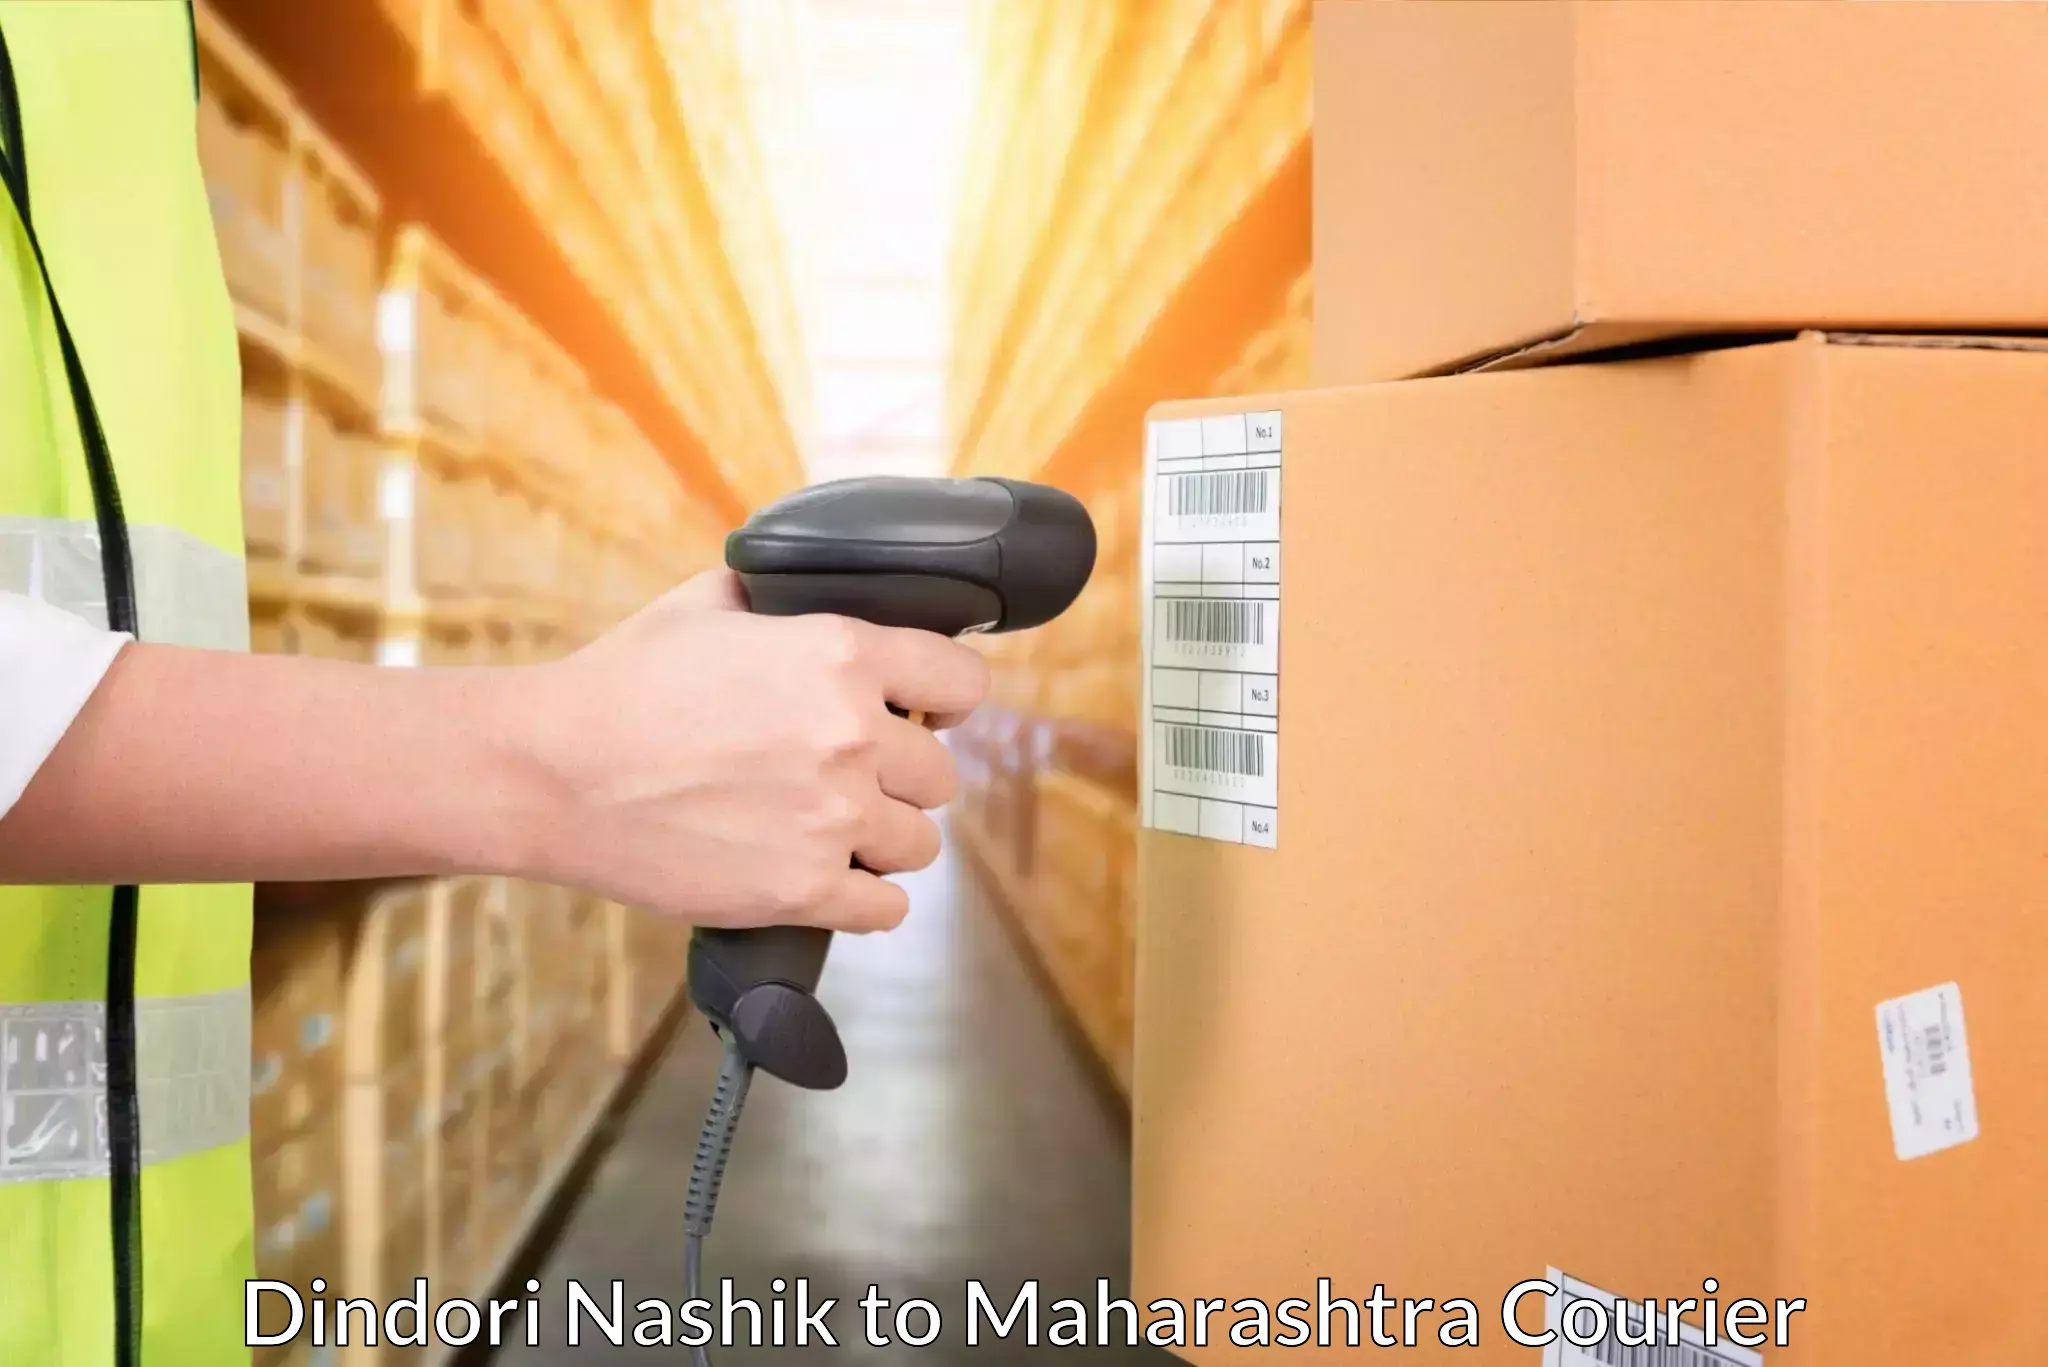 Trackable shipping service Dindori Nashik to Aurangabad